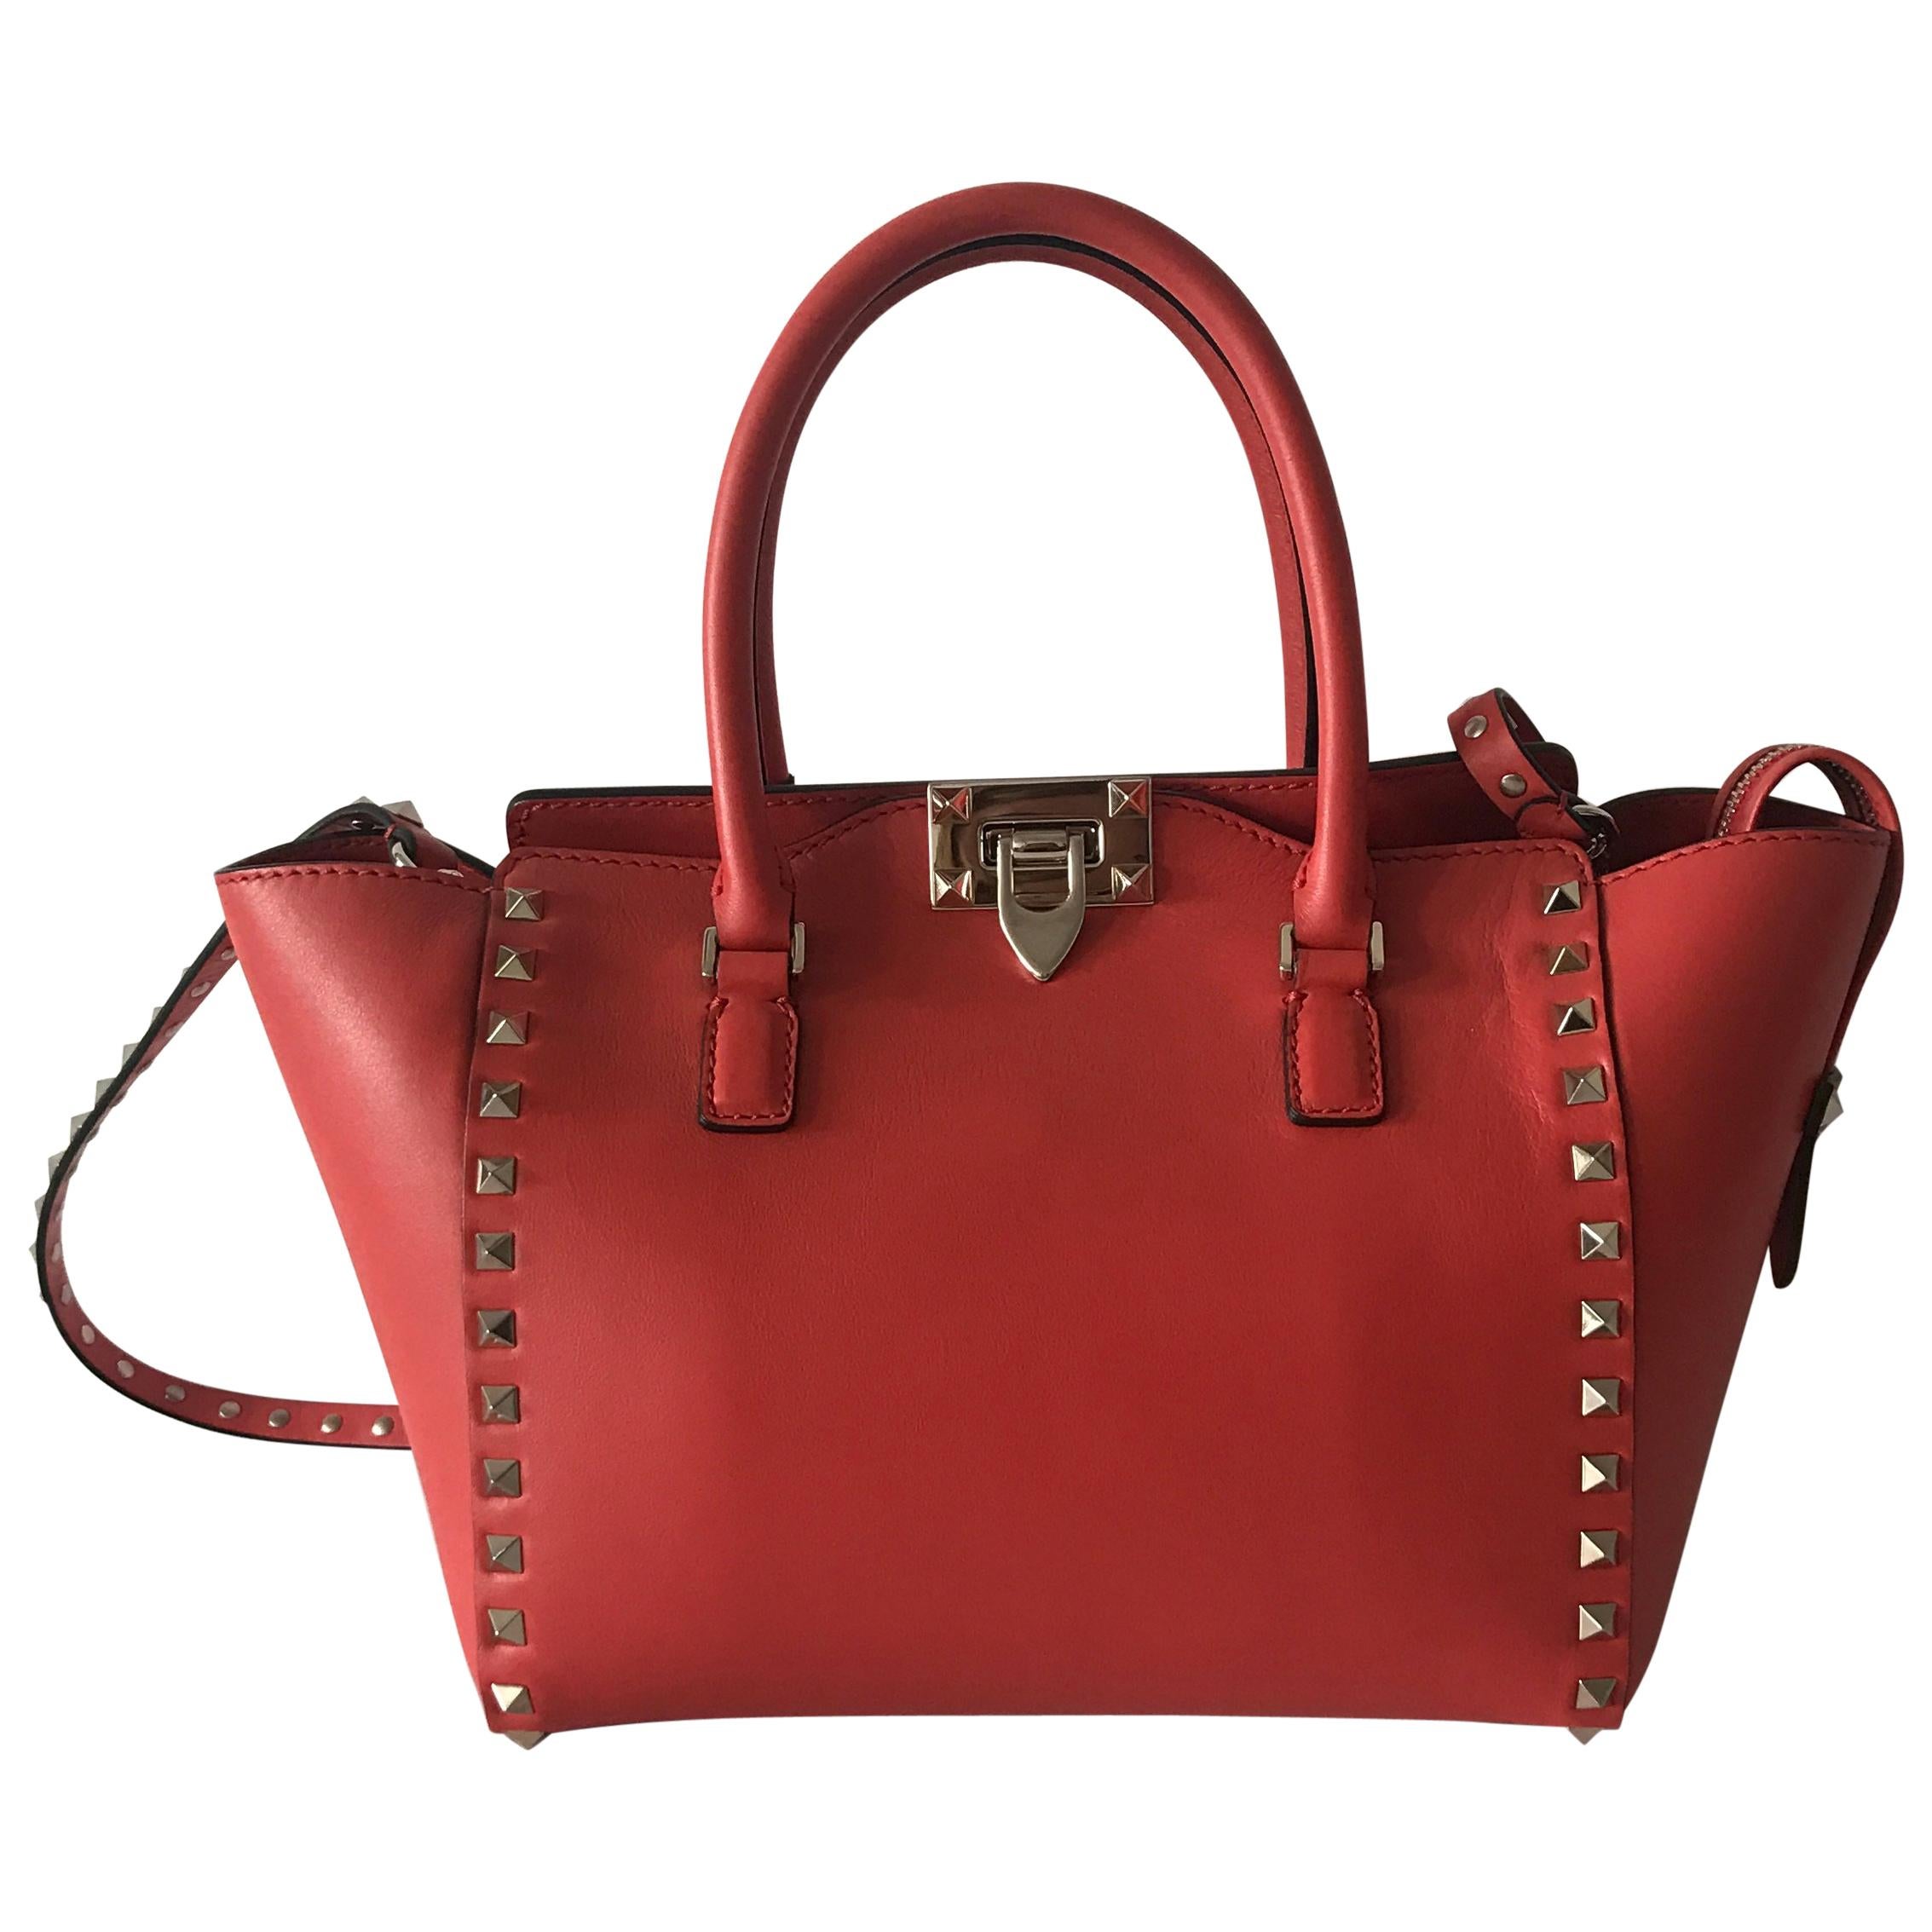 Valentino small rockstud leather handbag in cherry red 